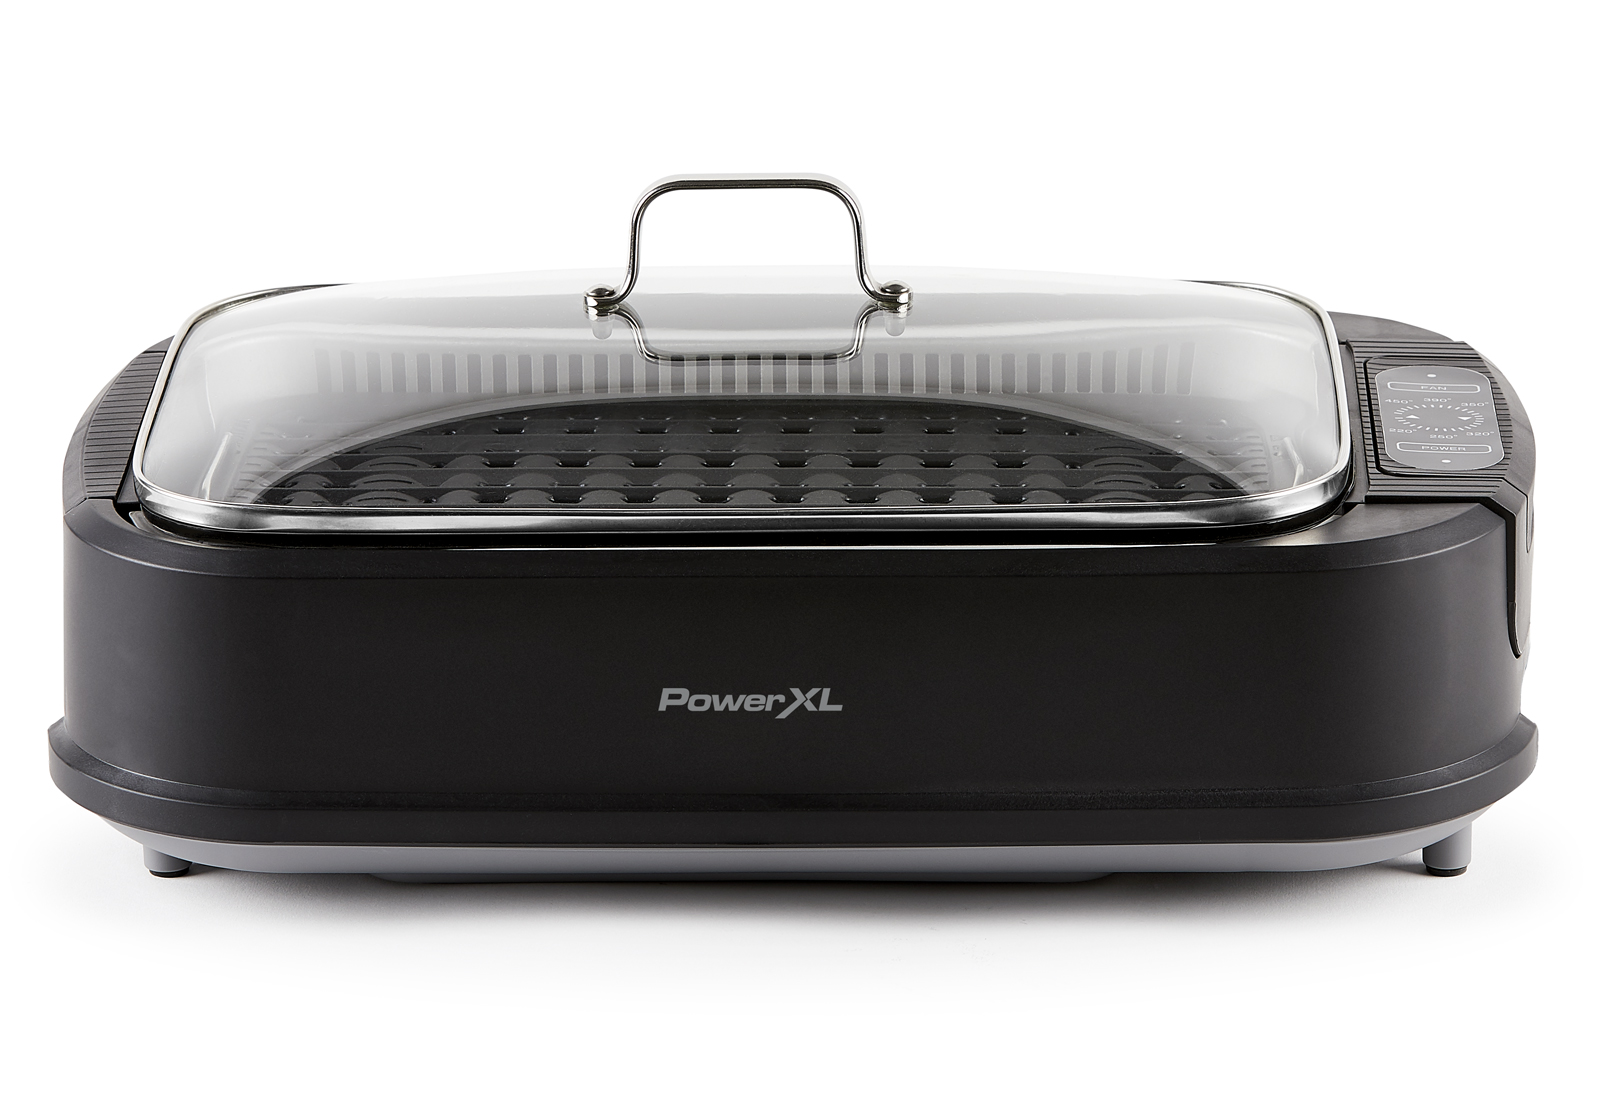 PowerXL Smokeless Grill Product Image